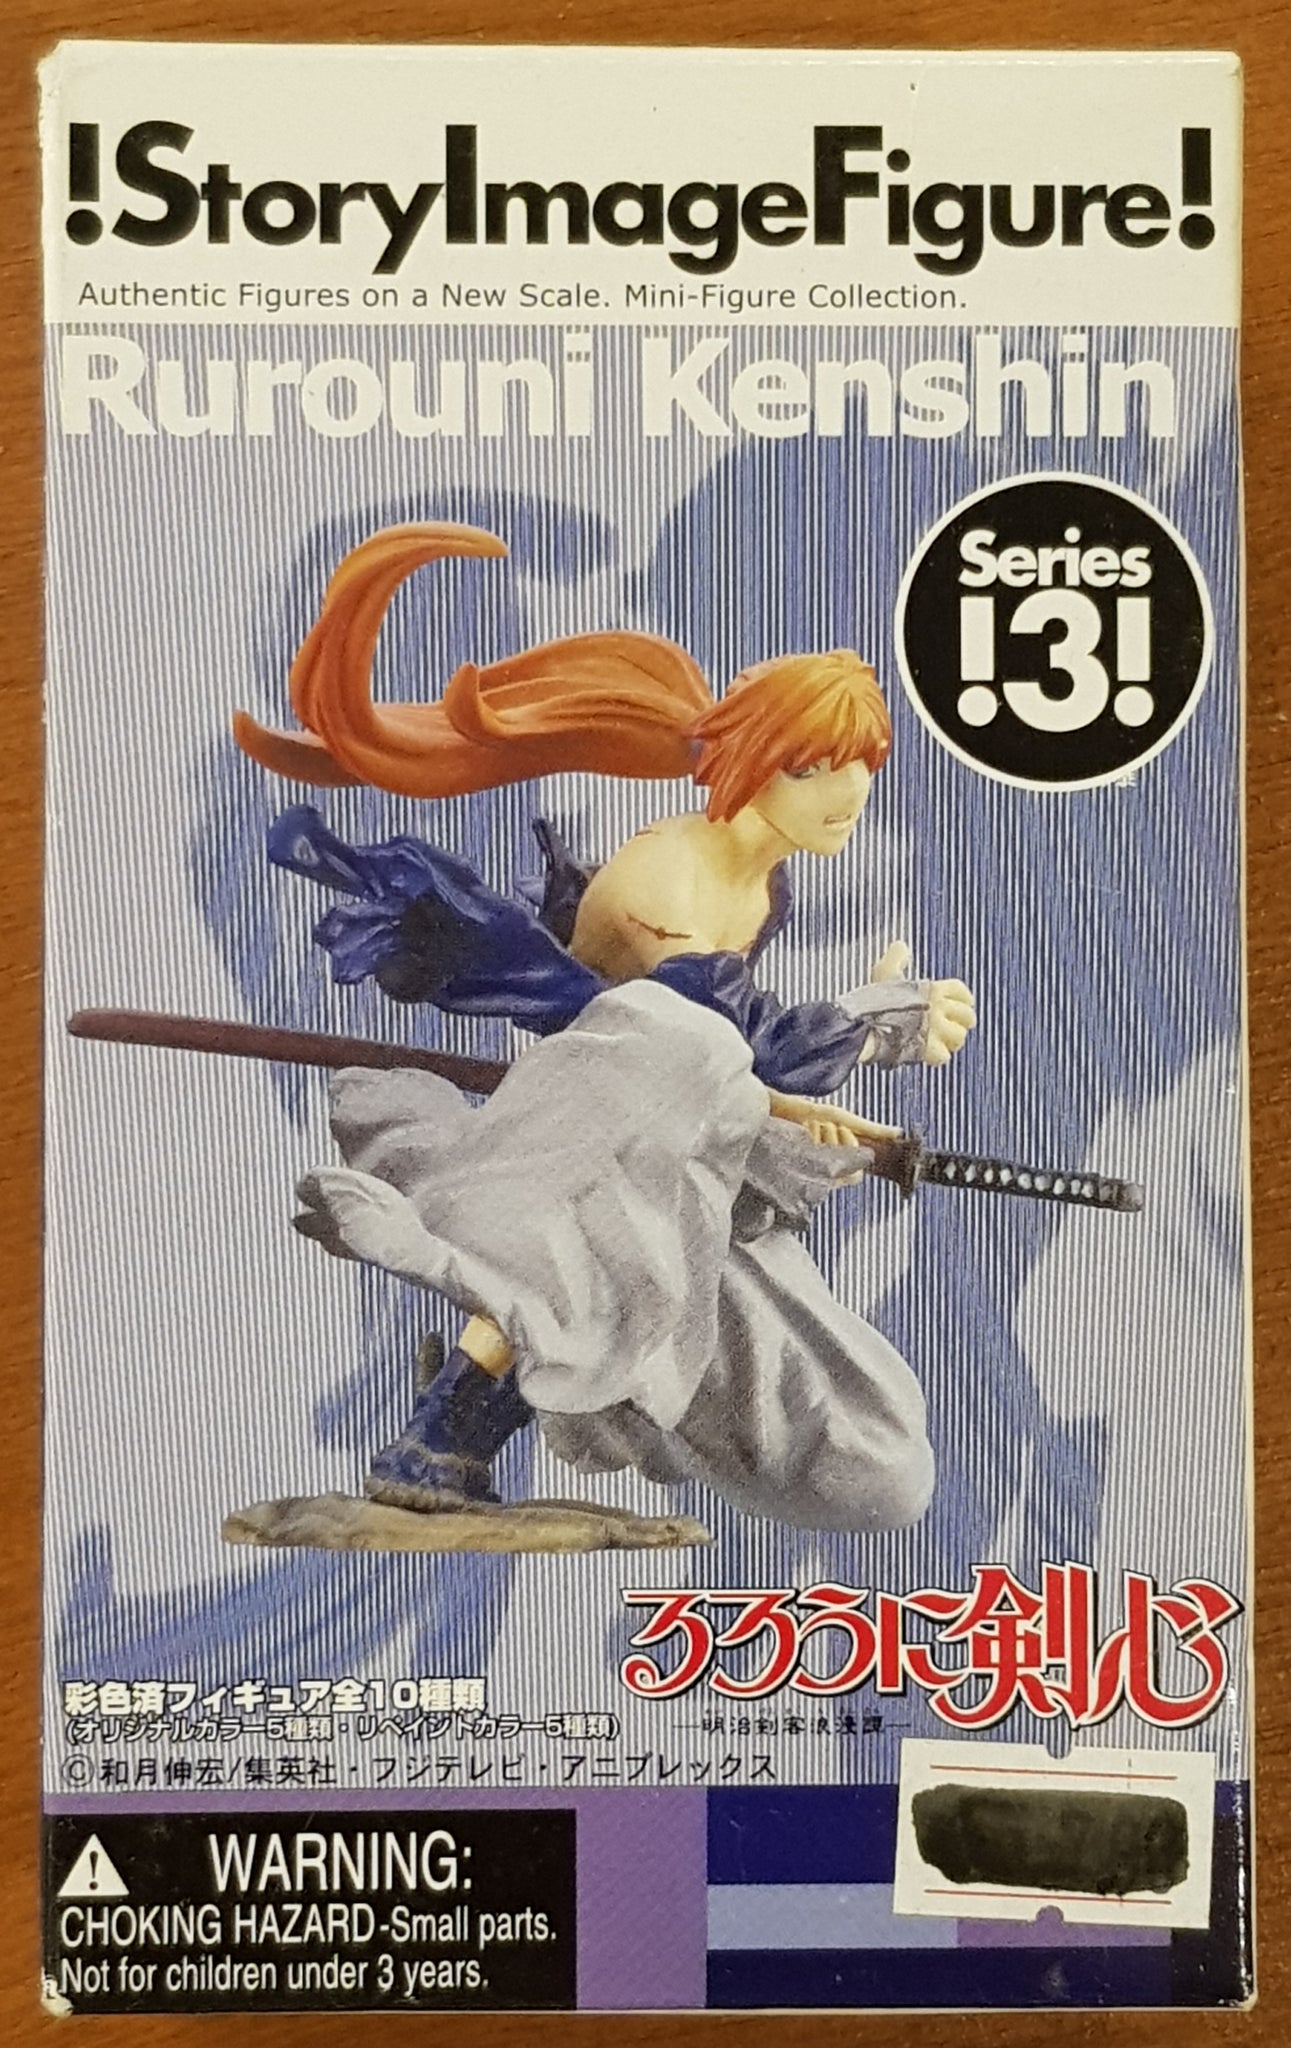 Rurouni Kenshin Saitoh Hajime Story Image Trading Figure (C)